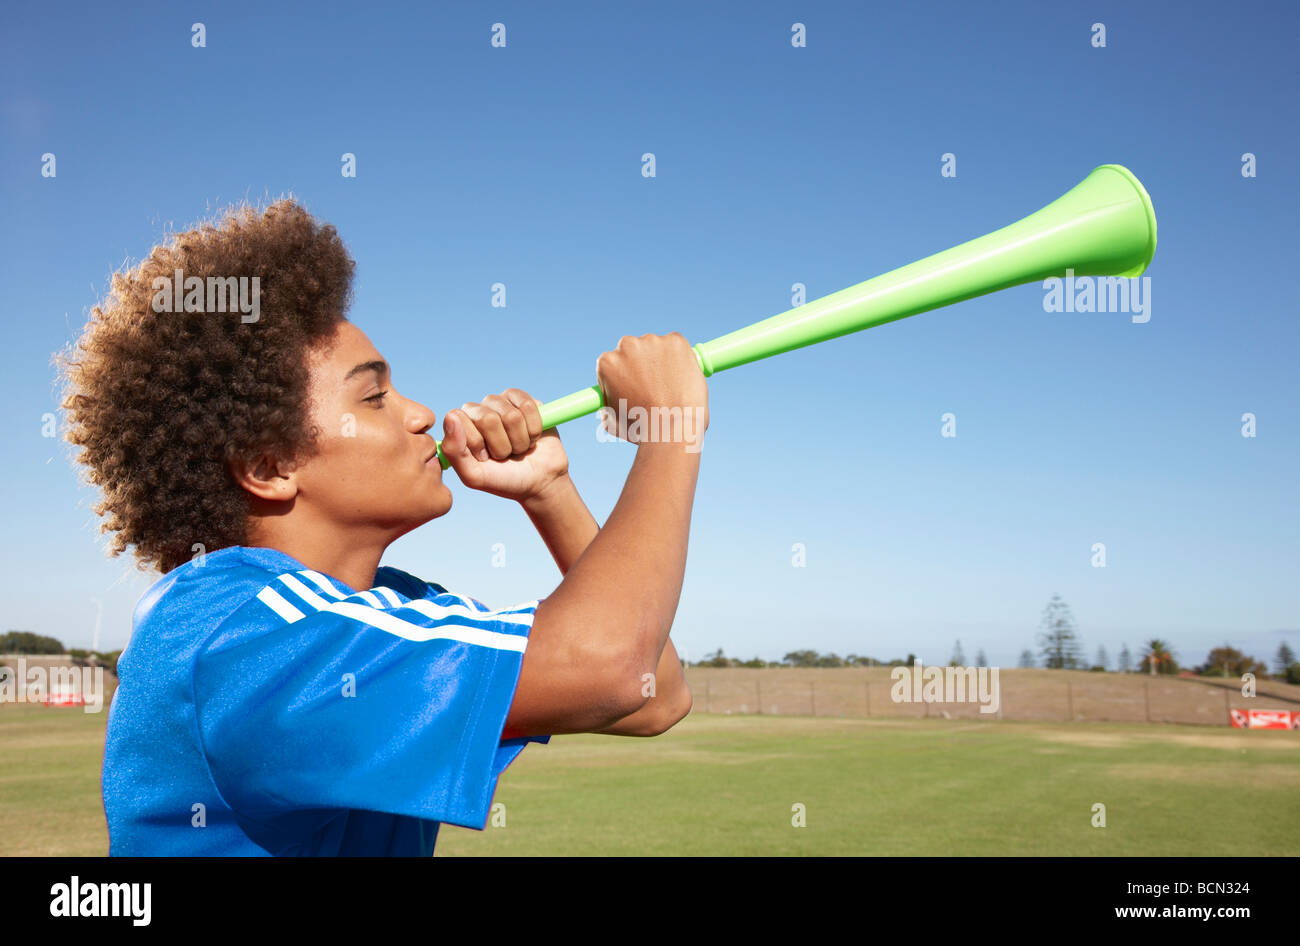 Quick Cheap and Easy Football Horn (Vuvuzela) : 6 Steps